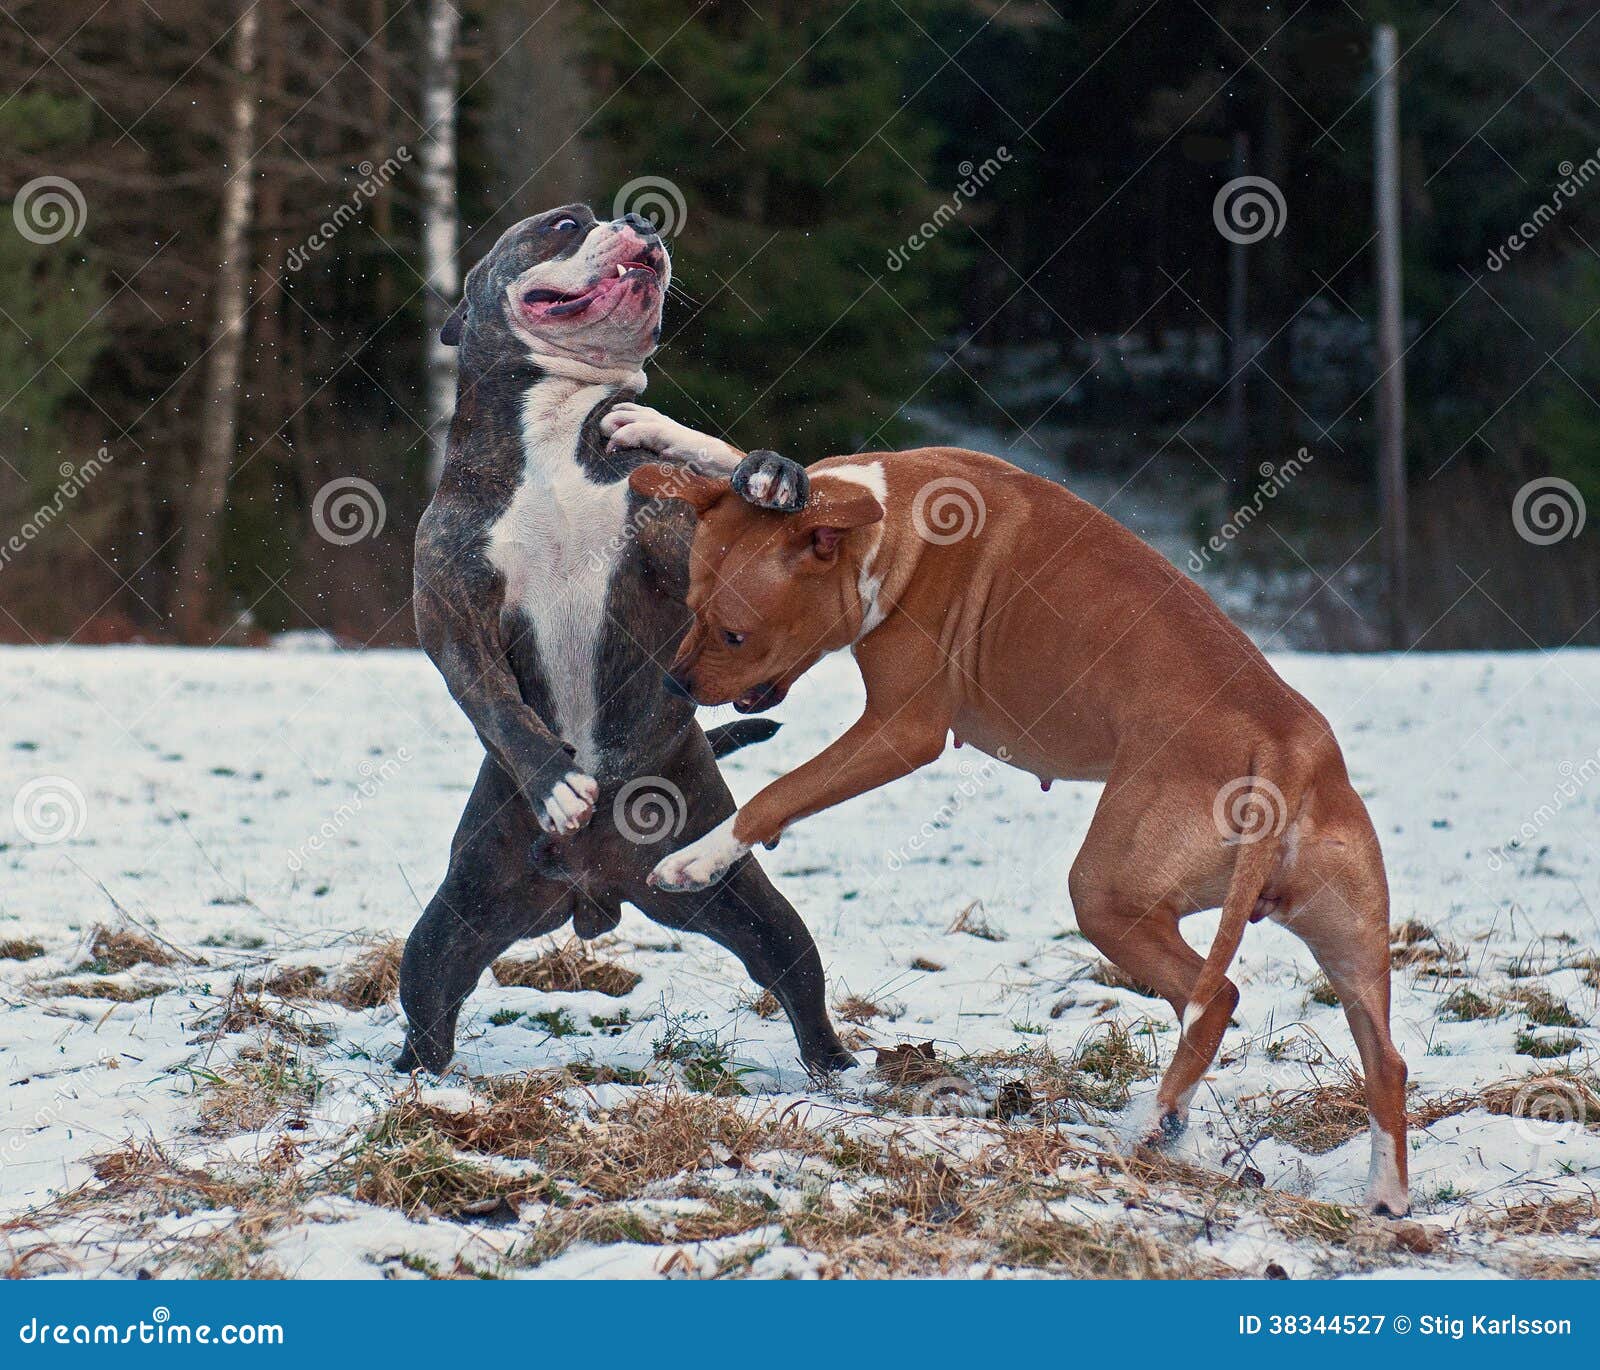 Pitbull Play Fighting With O.E. Bulldog Royalty Free Stock Photography